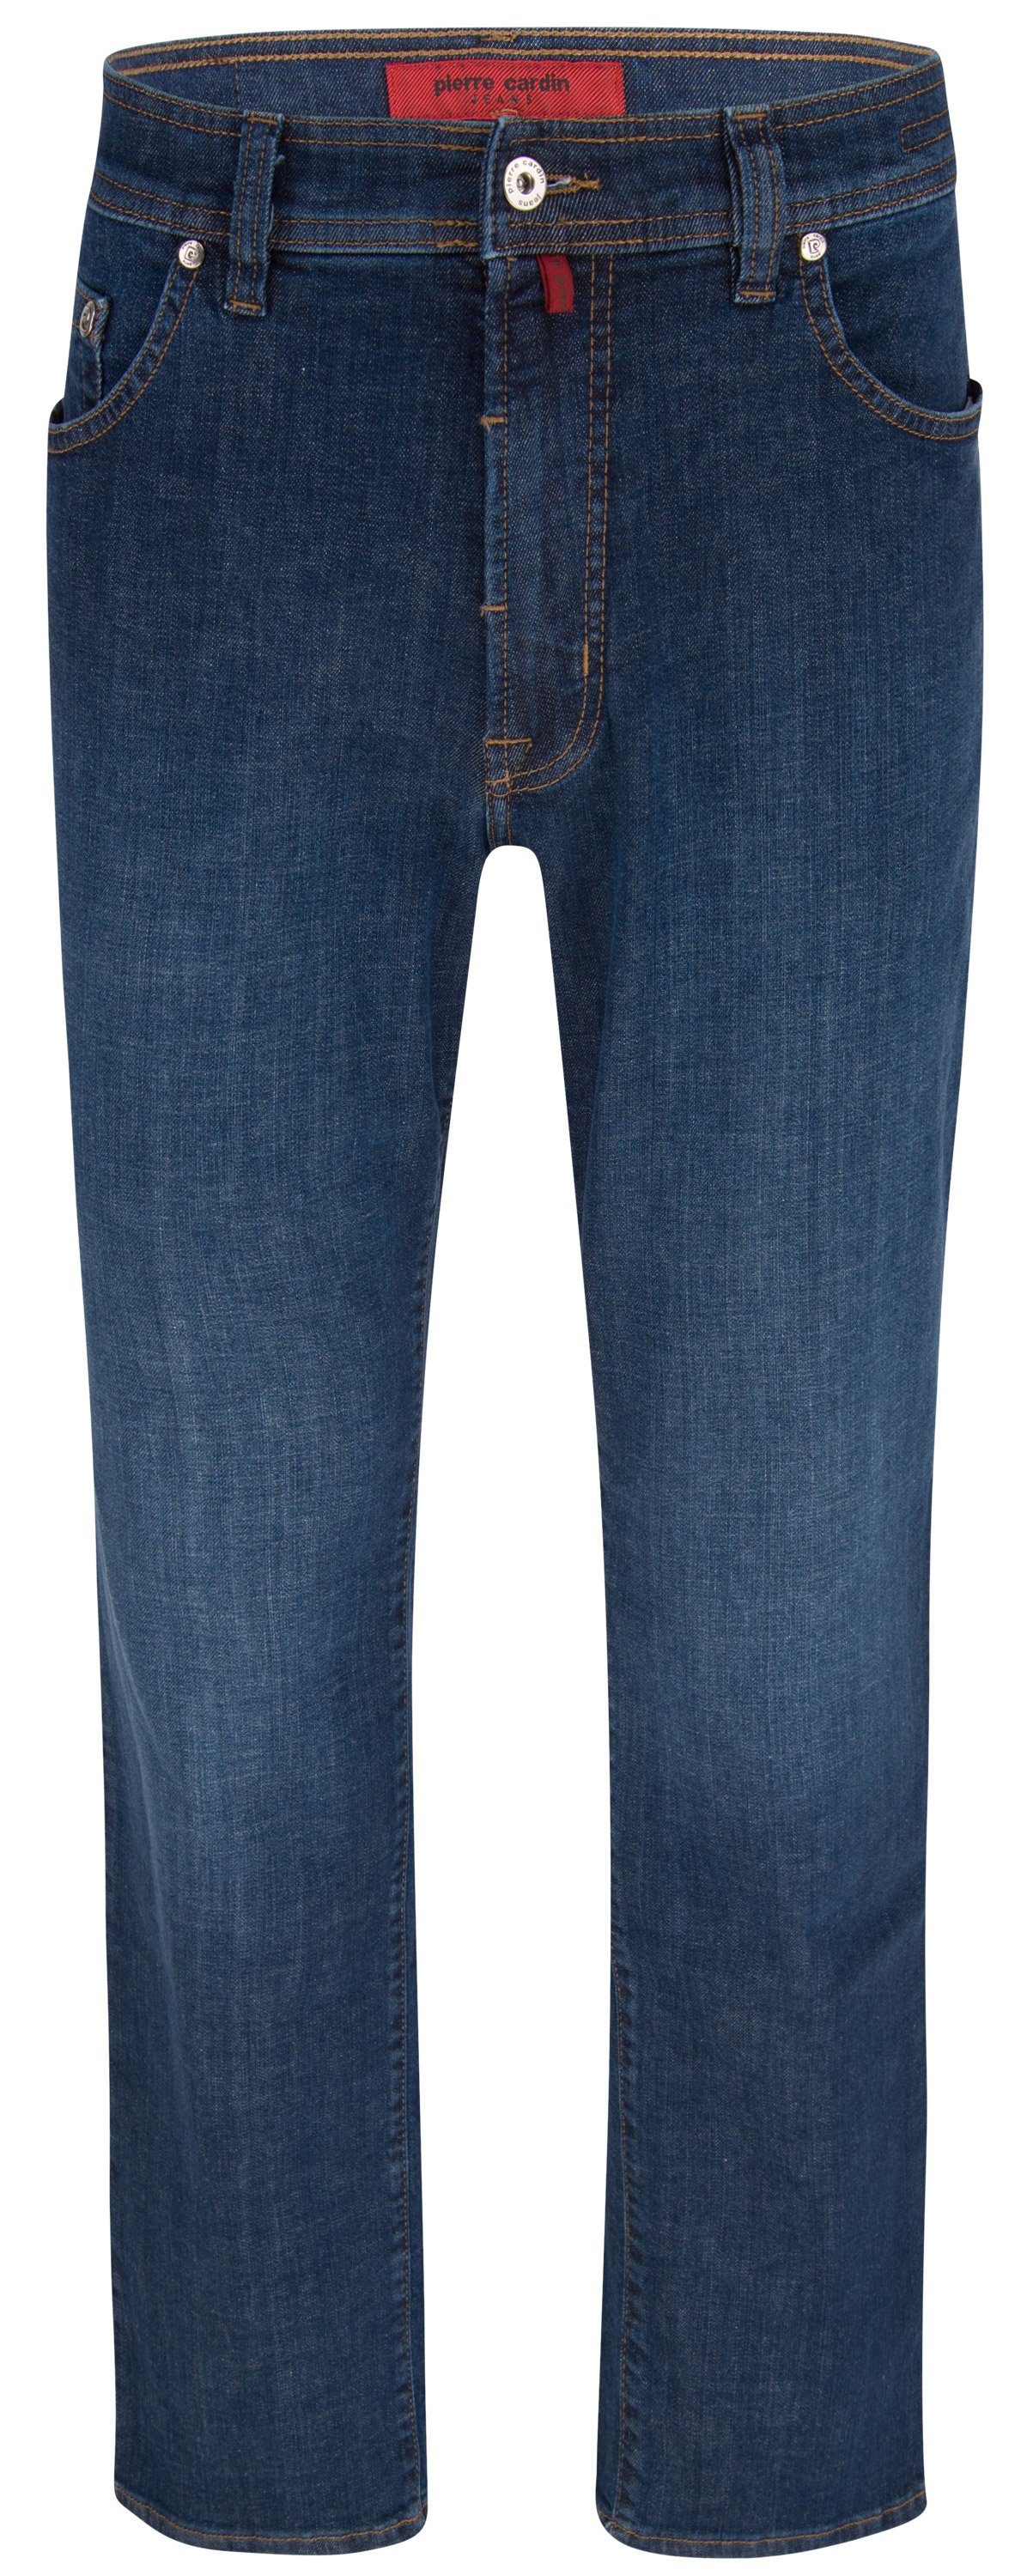 Bestseller-Online-Verkauf Pierre Cardin 5-Pocket-Jeans deep CARDIN - 7200.01 used sea DIJON 3231 DENIM PIERRE EDITION indigo